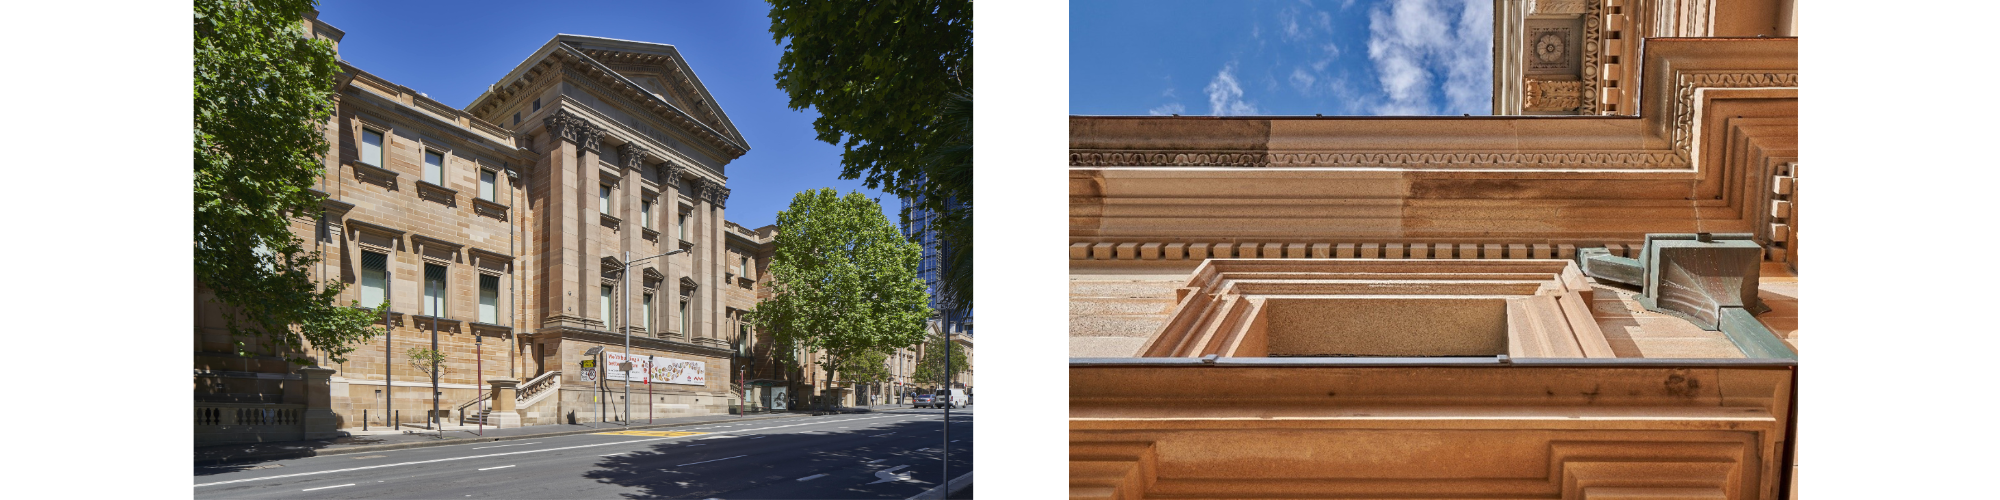 Australian Museum - building exterior and detail